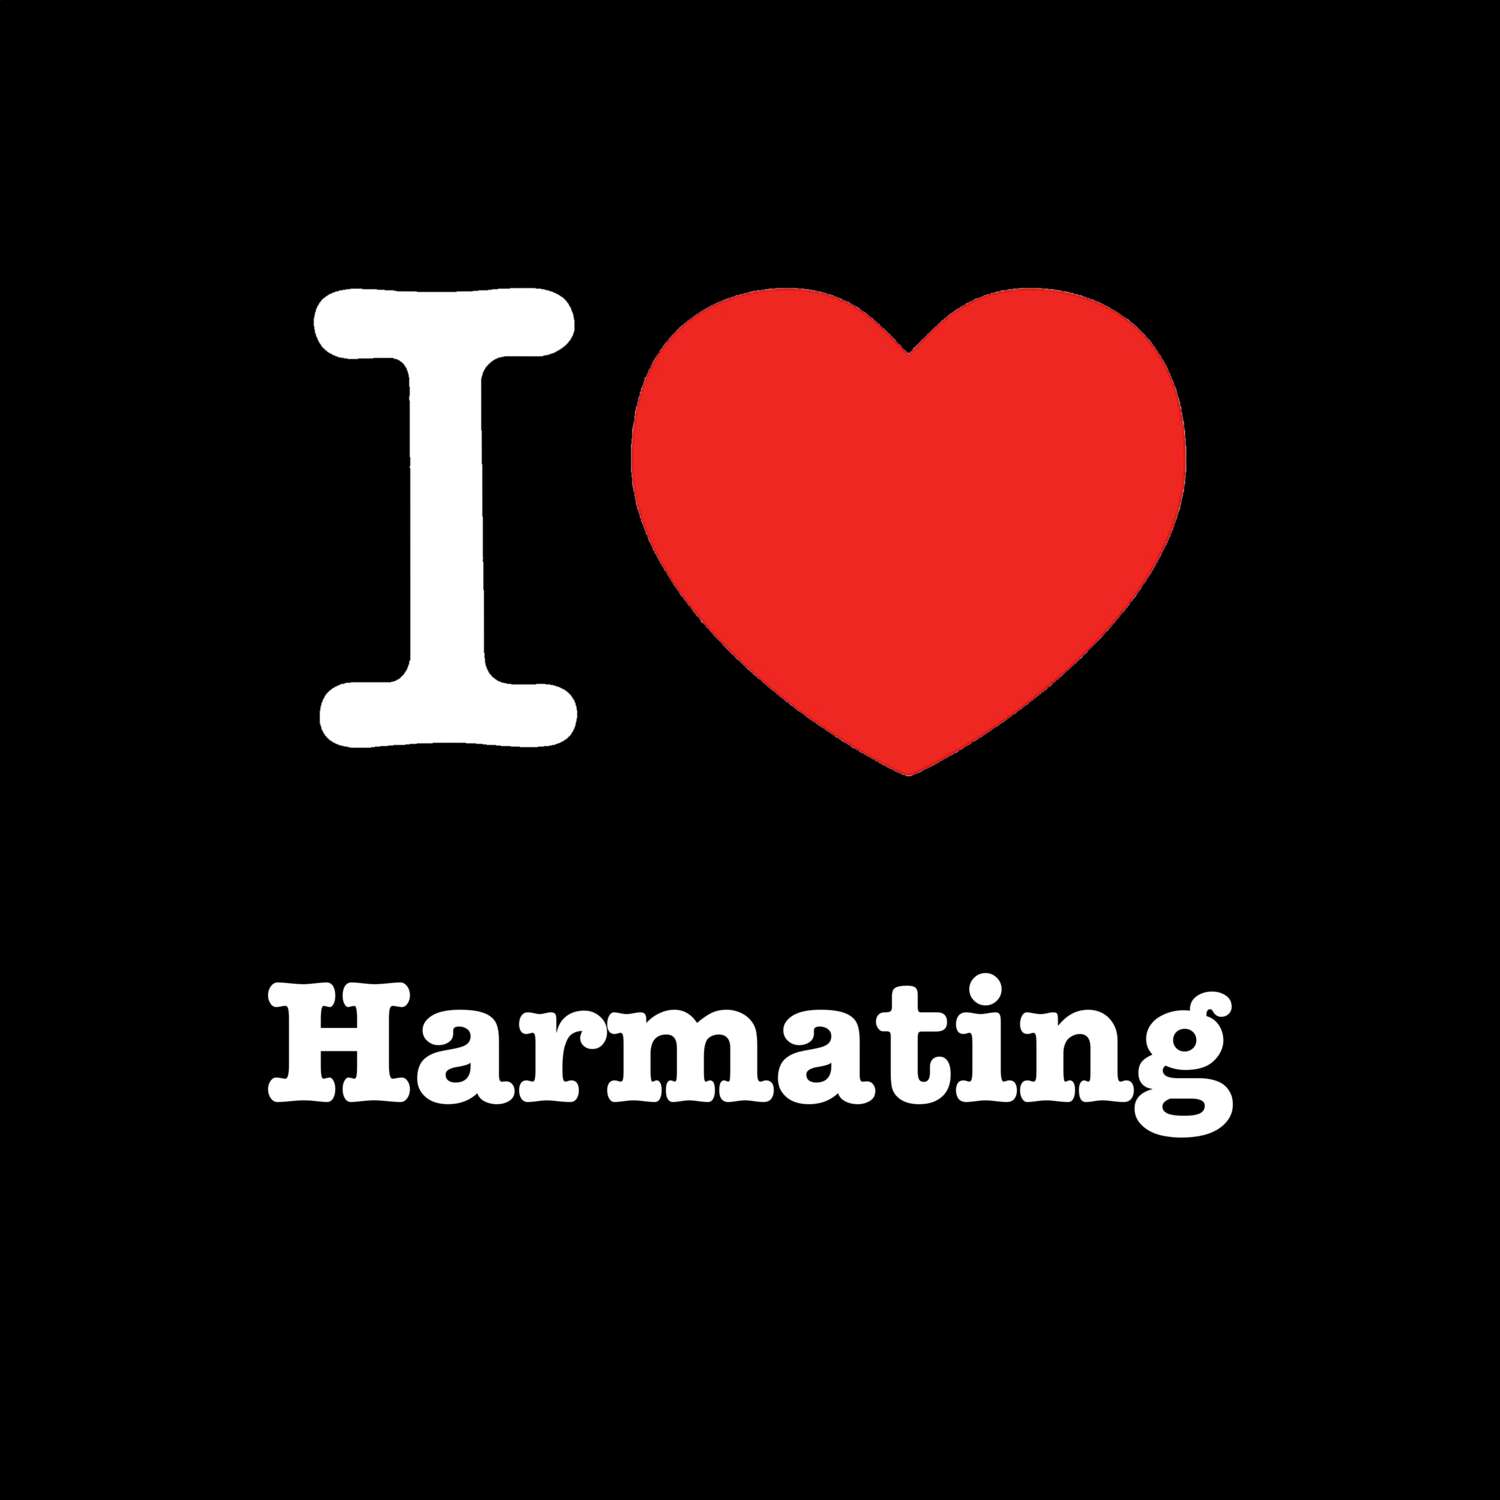 Harmating T-Shirt »I love«